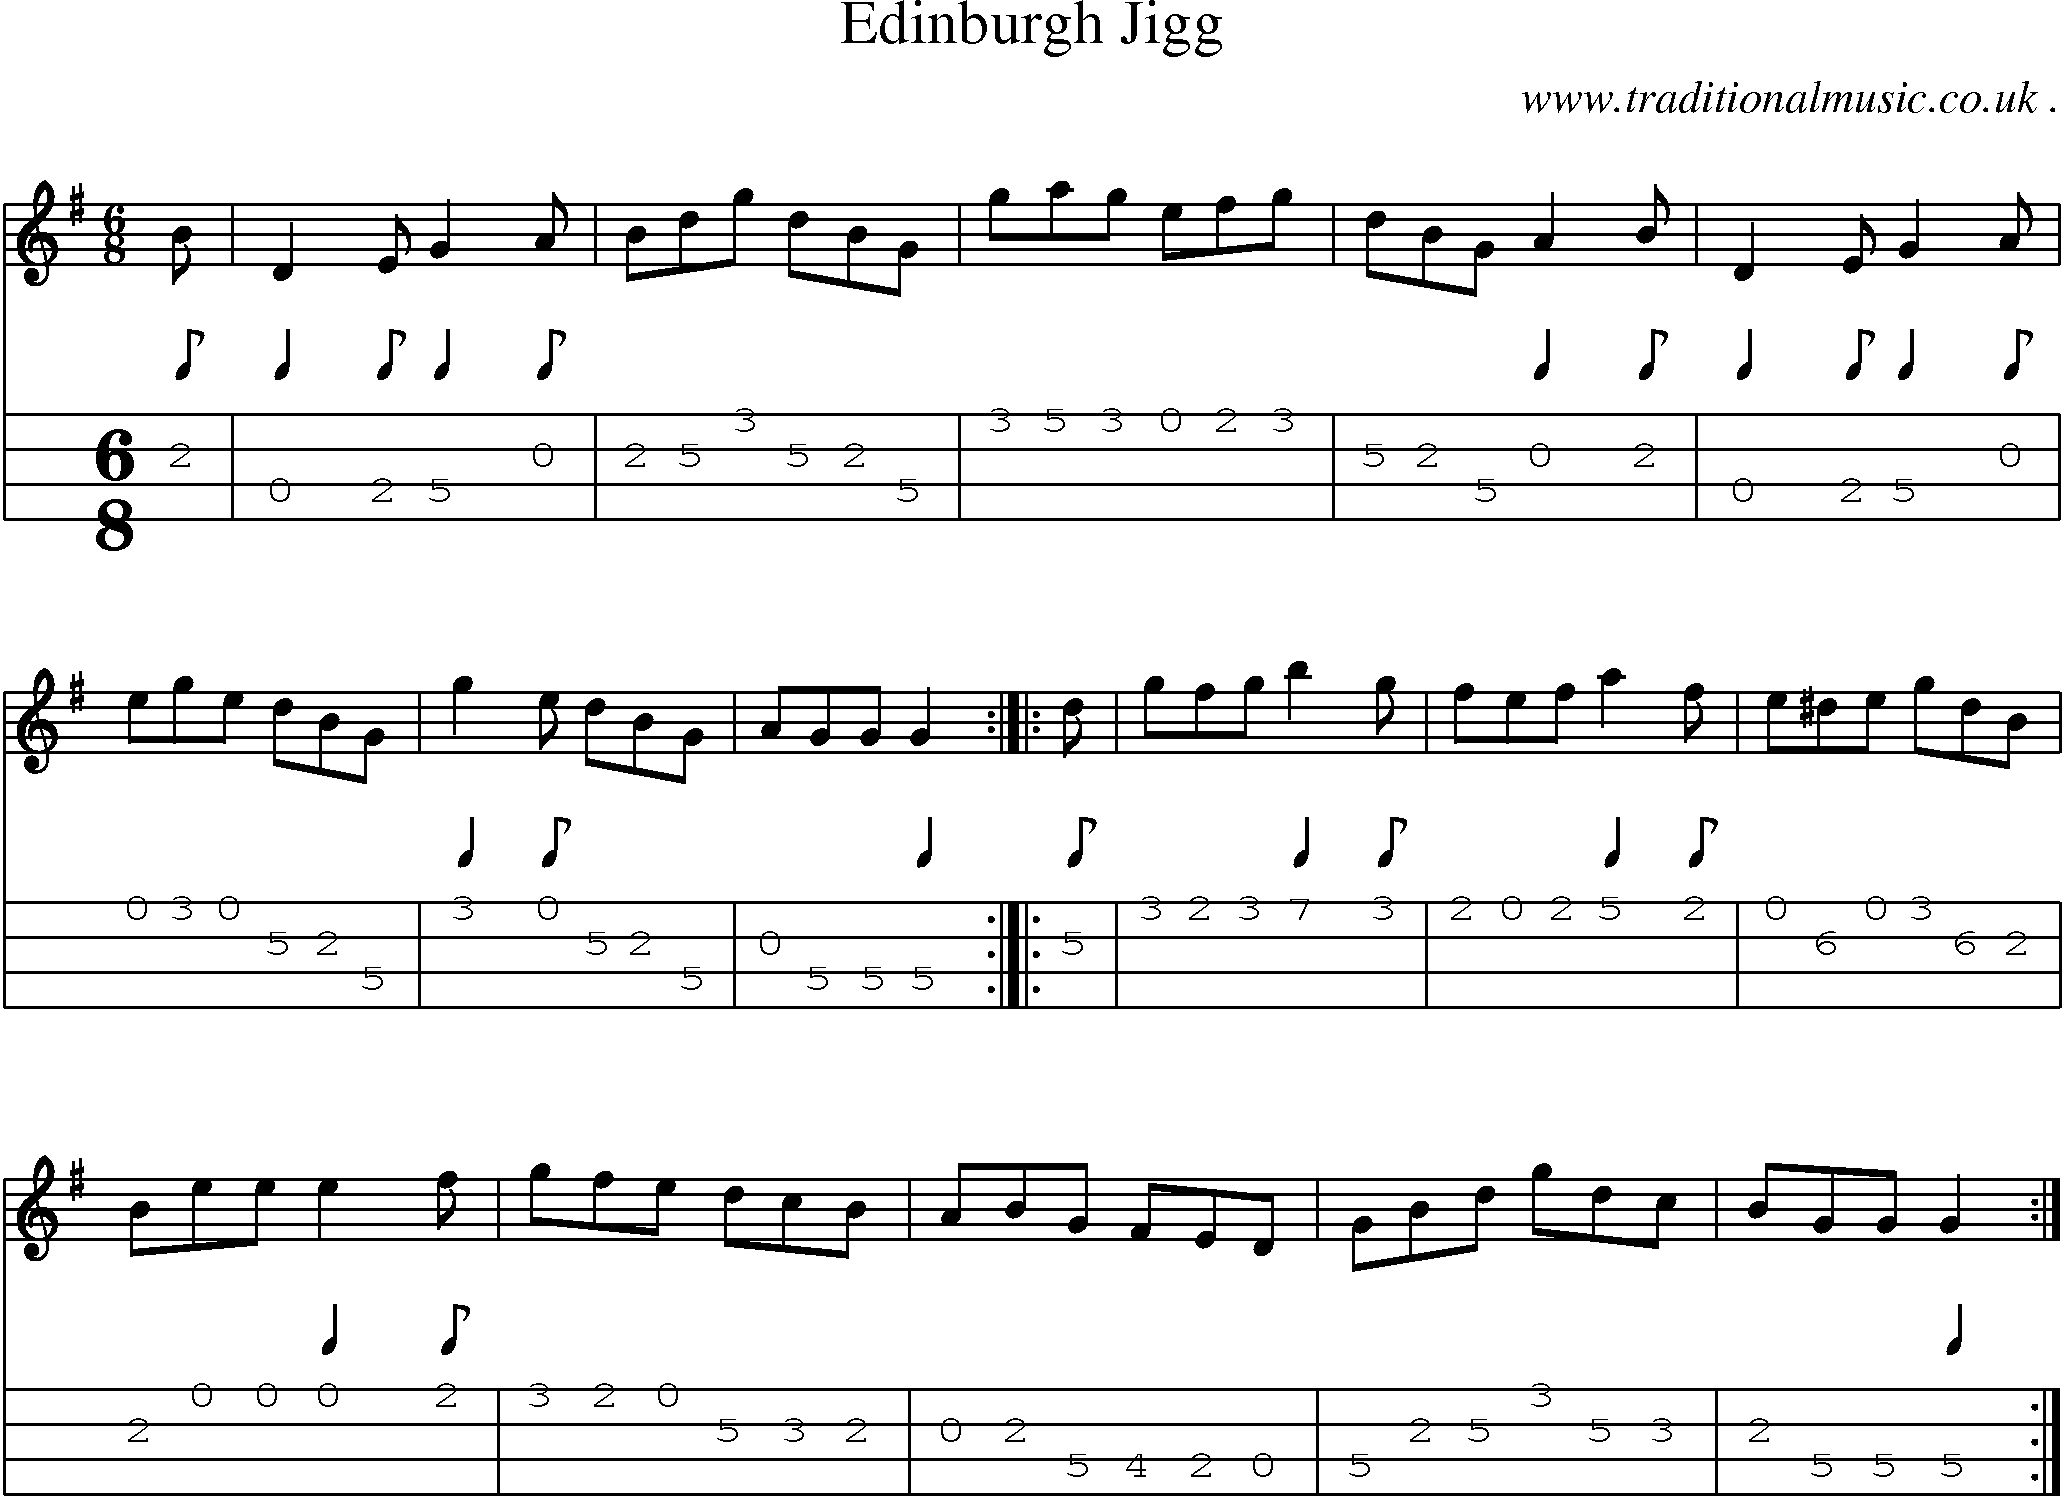 Sheet-music  score, Chords and Mandolin Tabs for Edinburgh Jigg